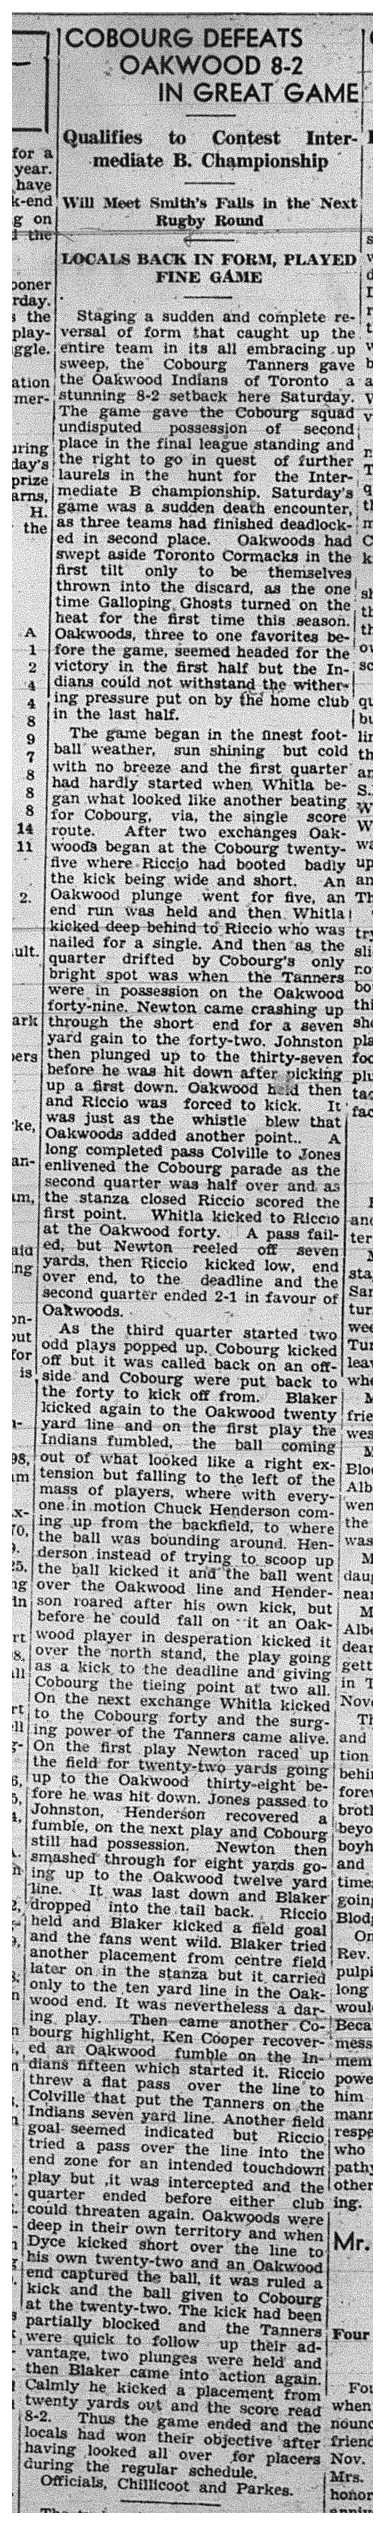 1939-11-30 Football -Cobourg Tanners down Oakwood